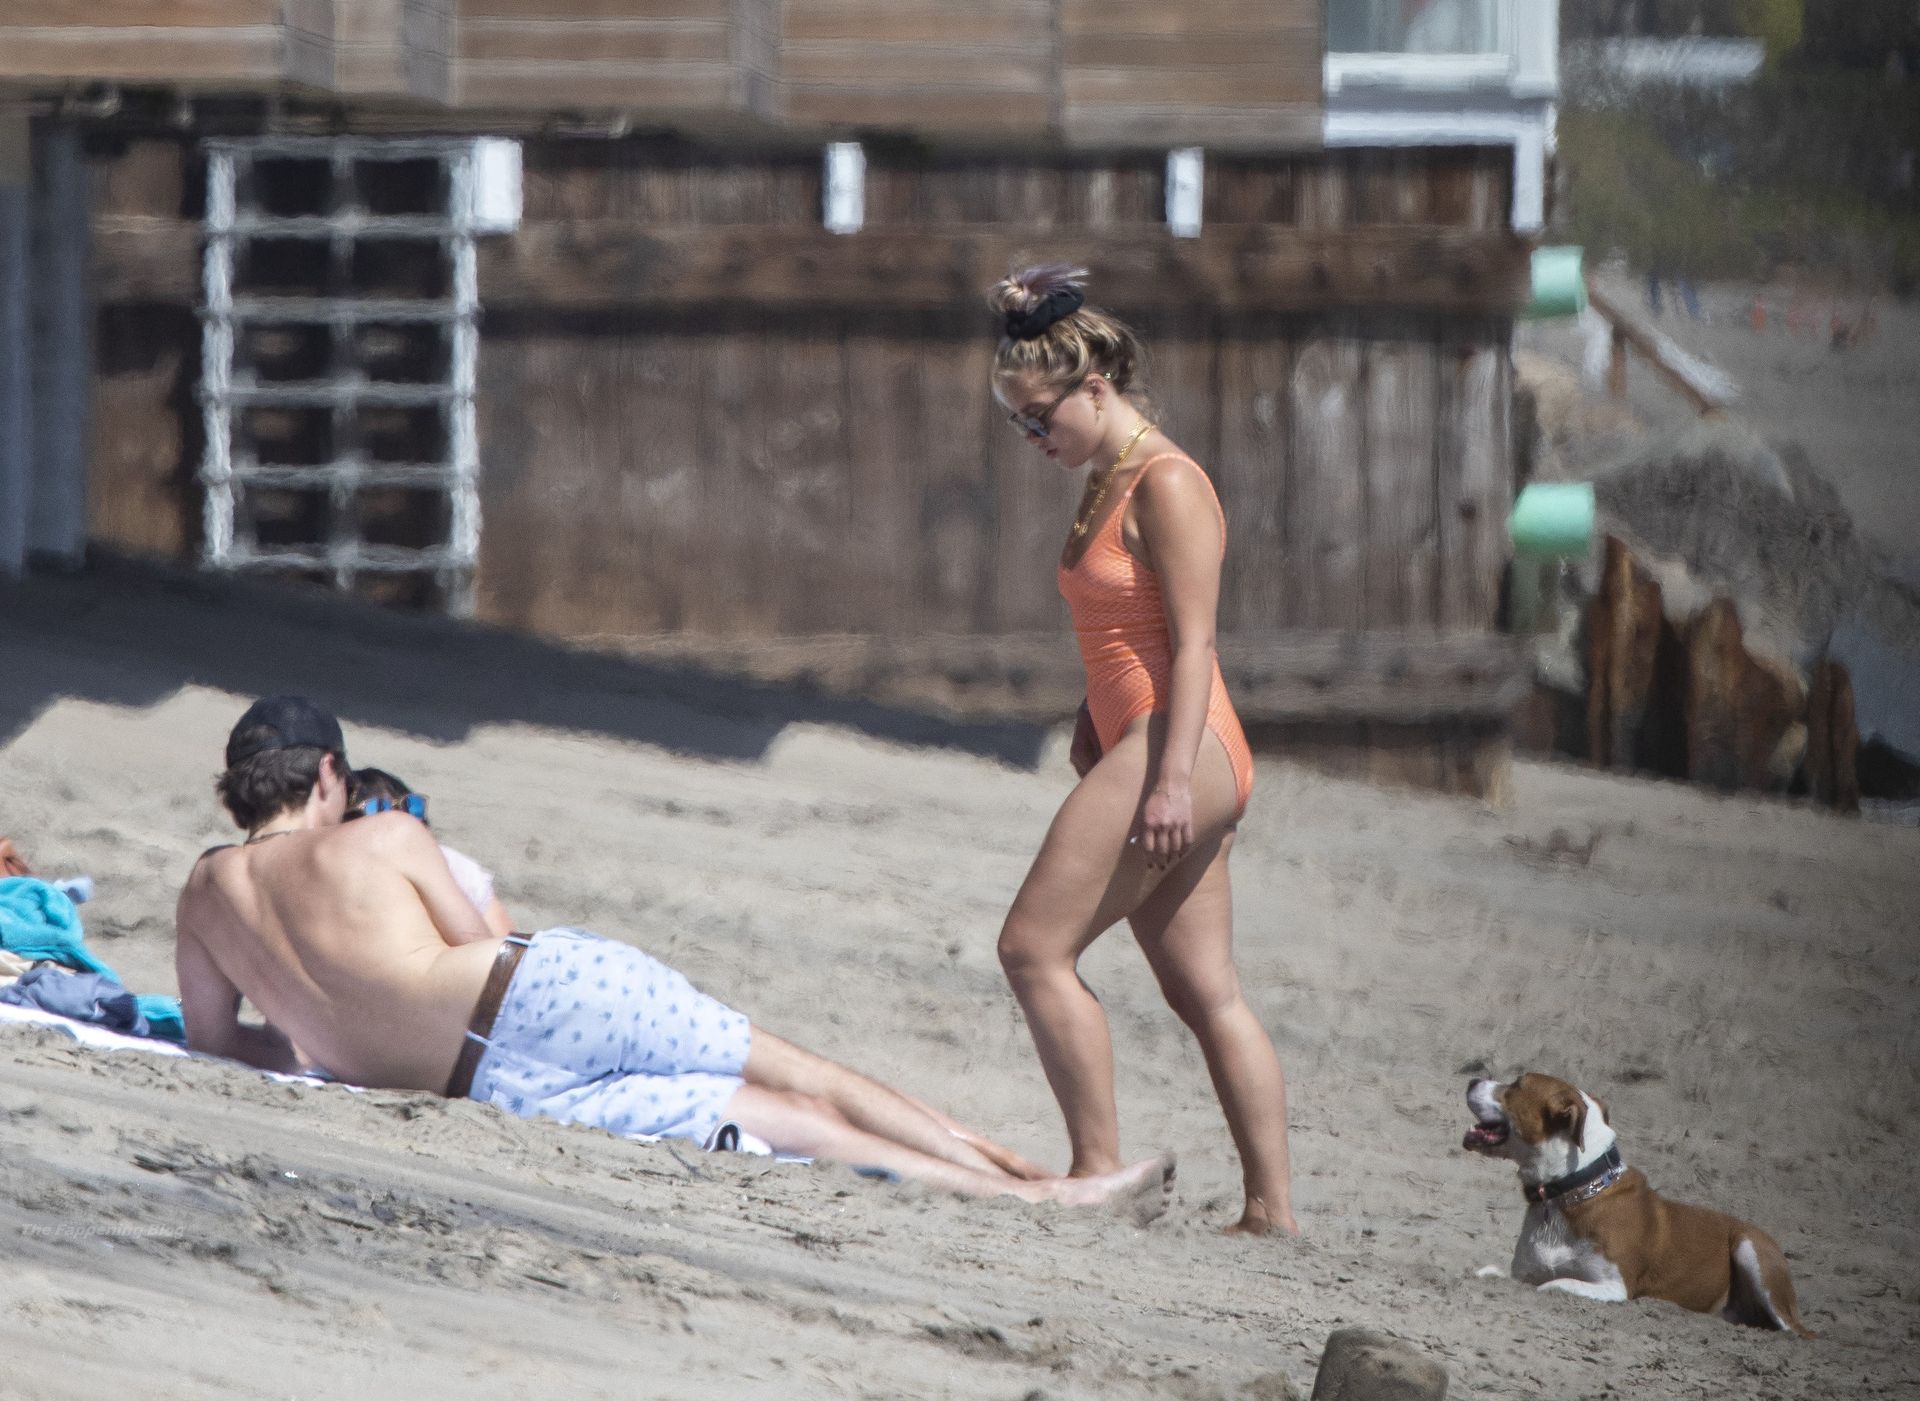 Zach Braff & Florence Pugh Hit the Beach in Malibu (53 Photos)